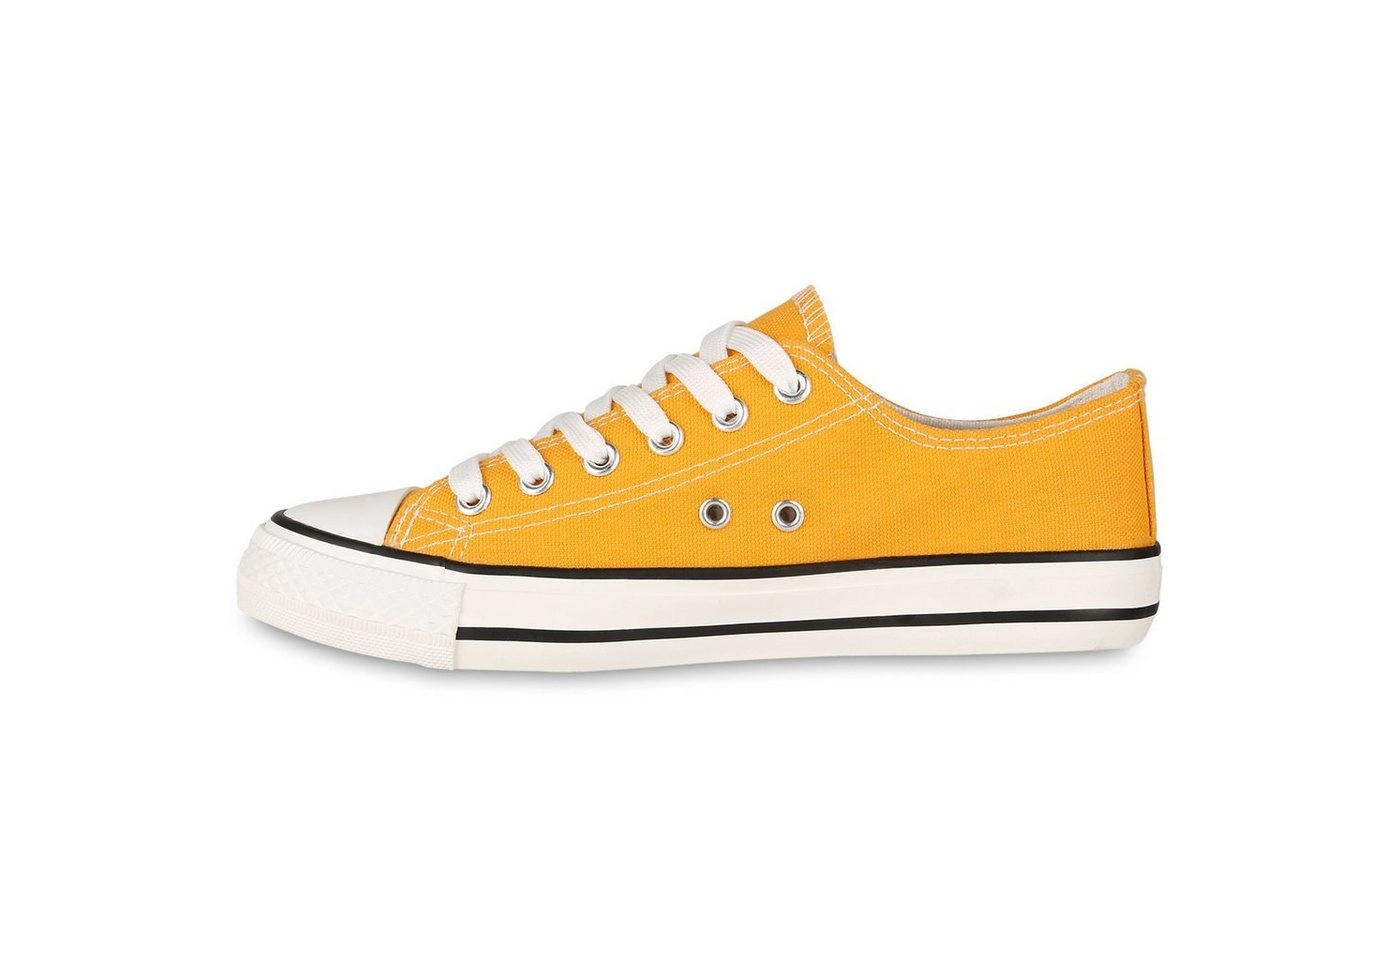 VAN HILL »97316 MS E-4 Damen Sneaker-ebay« Stiefel Bequeme Schuhe